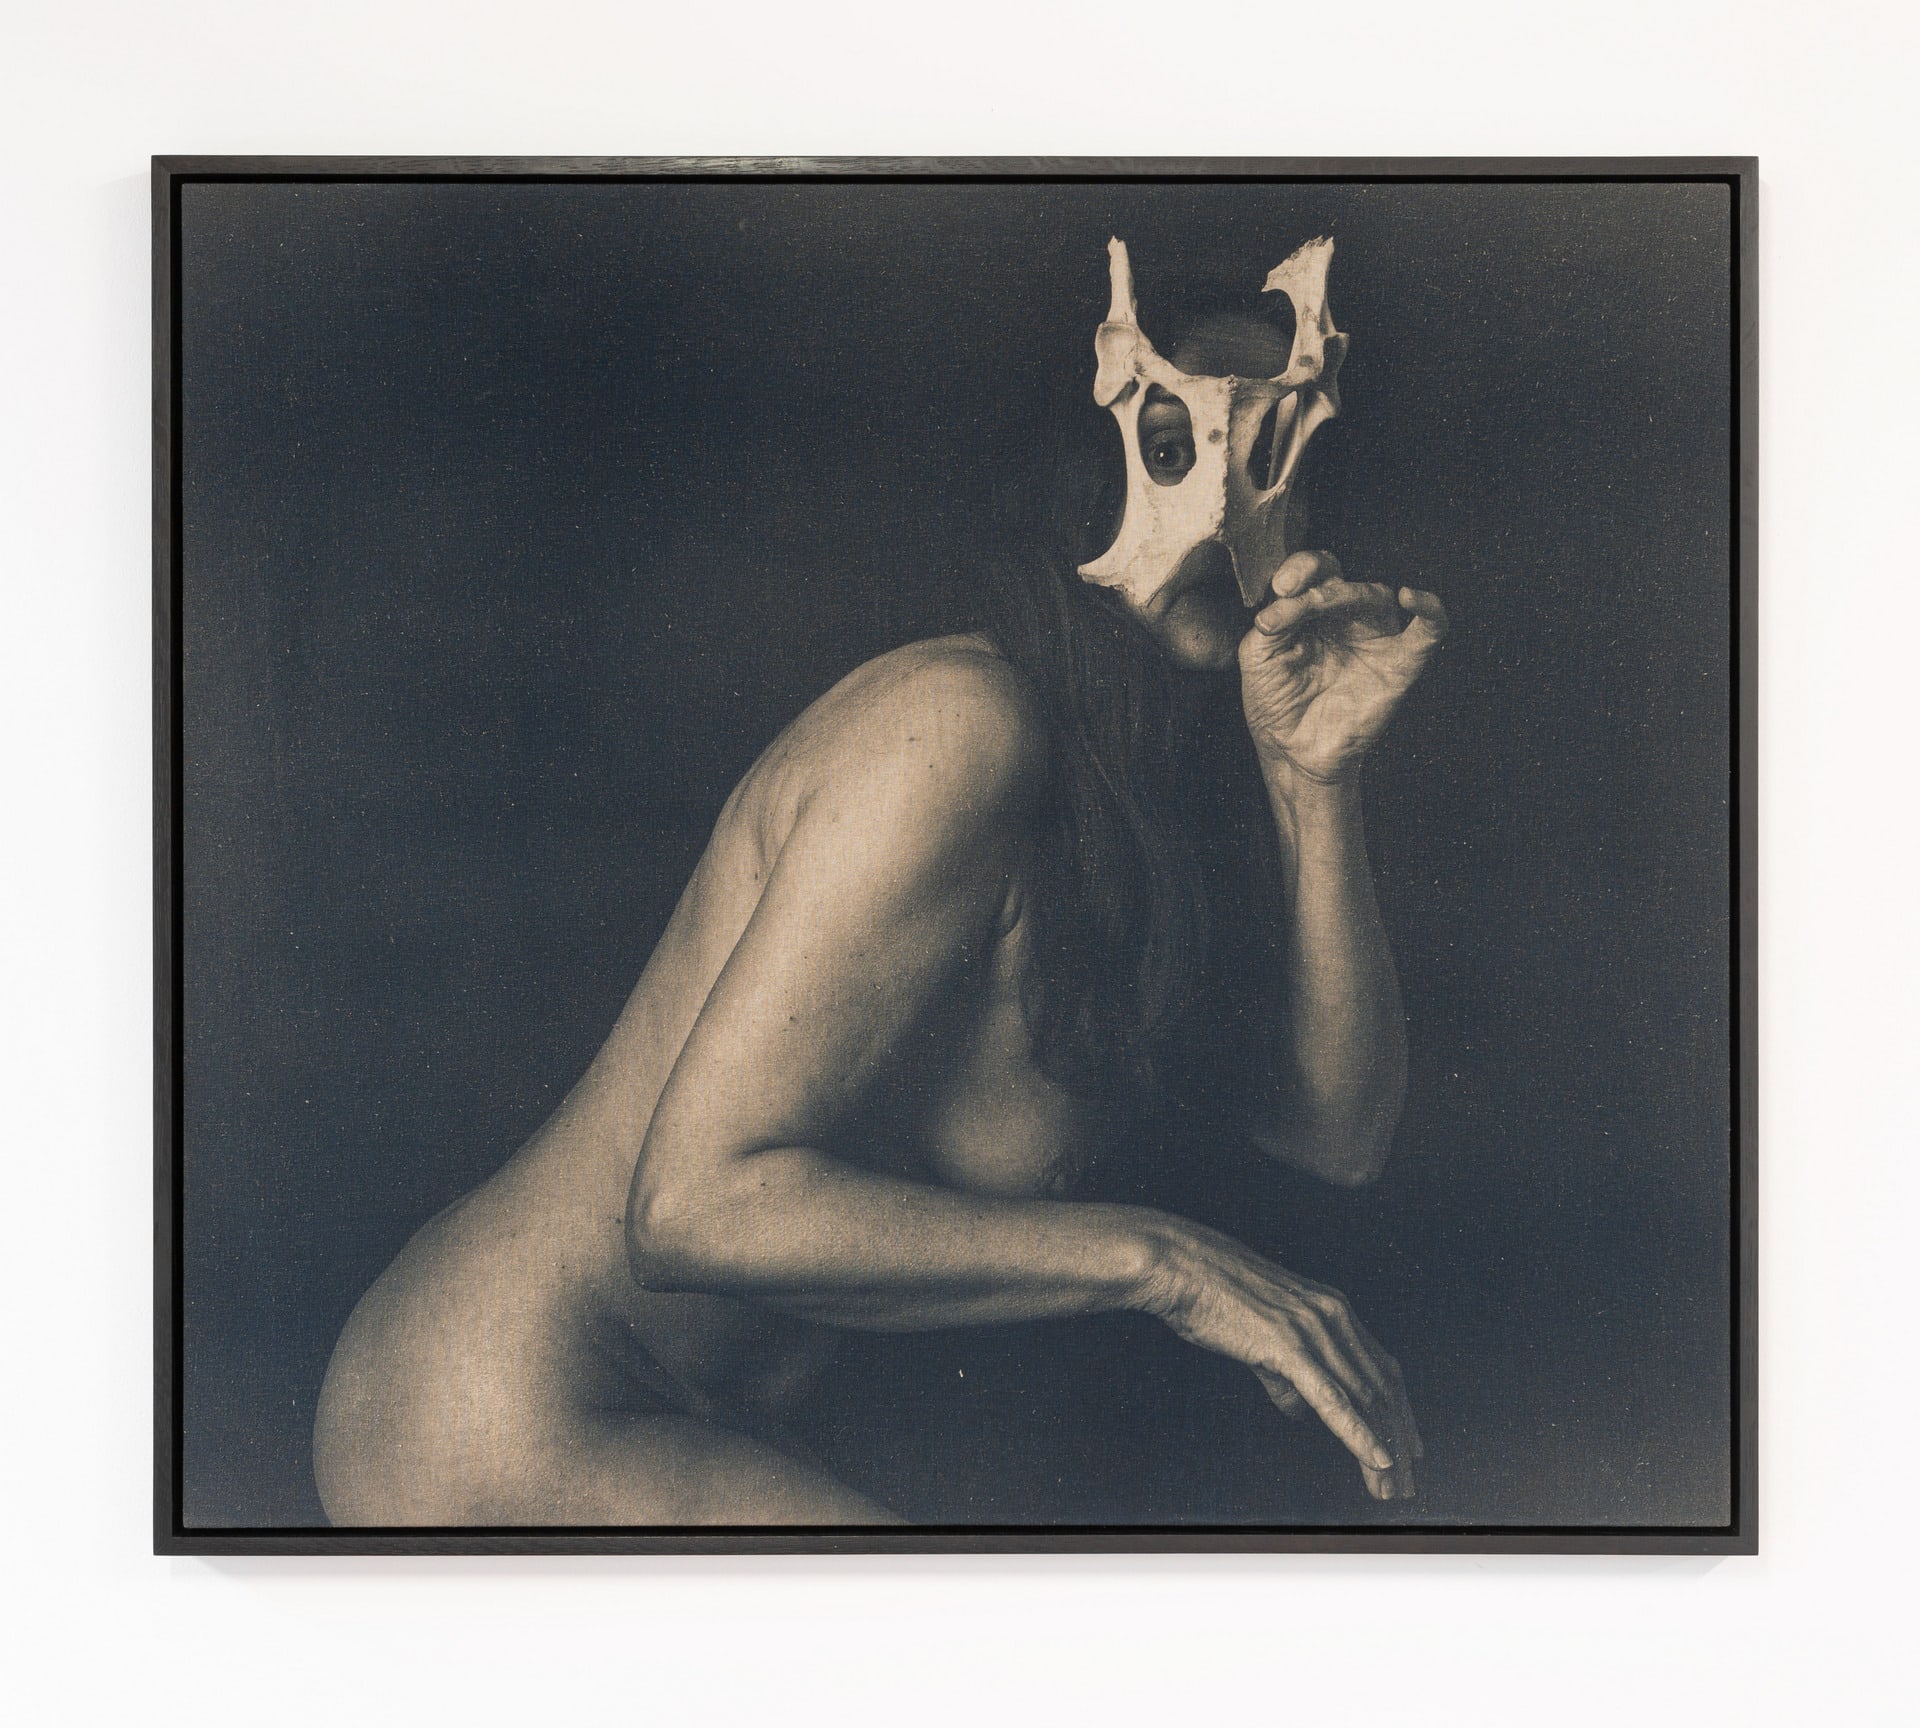 A woman pretending to be a deer, holding up a deer pelvis as a mask